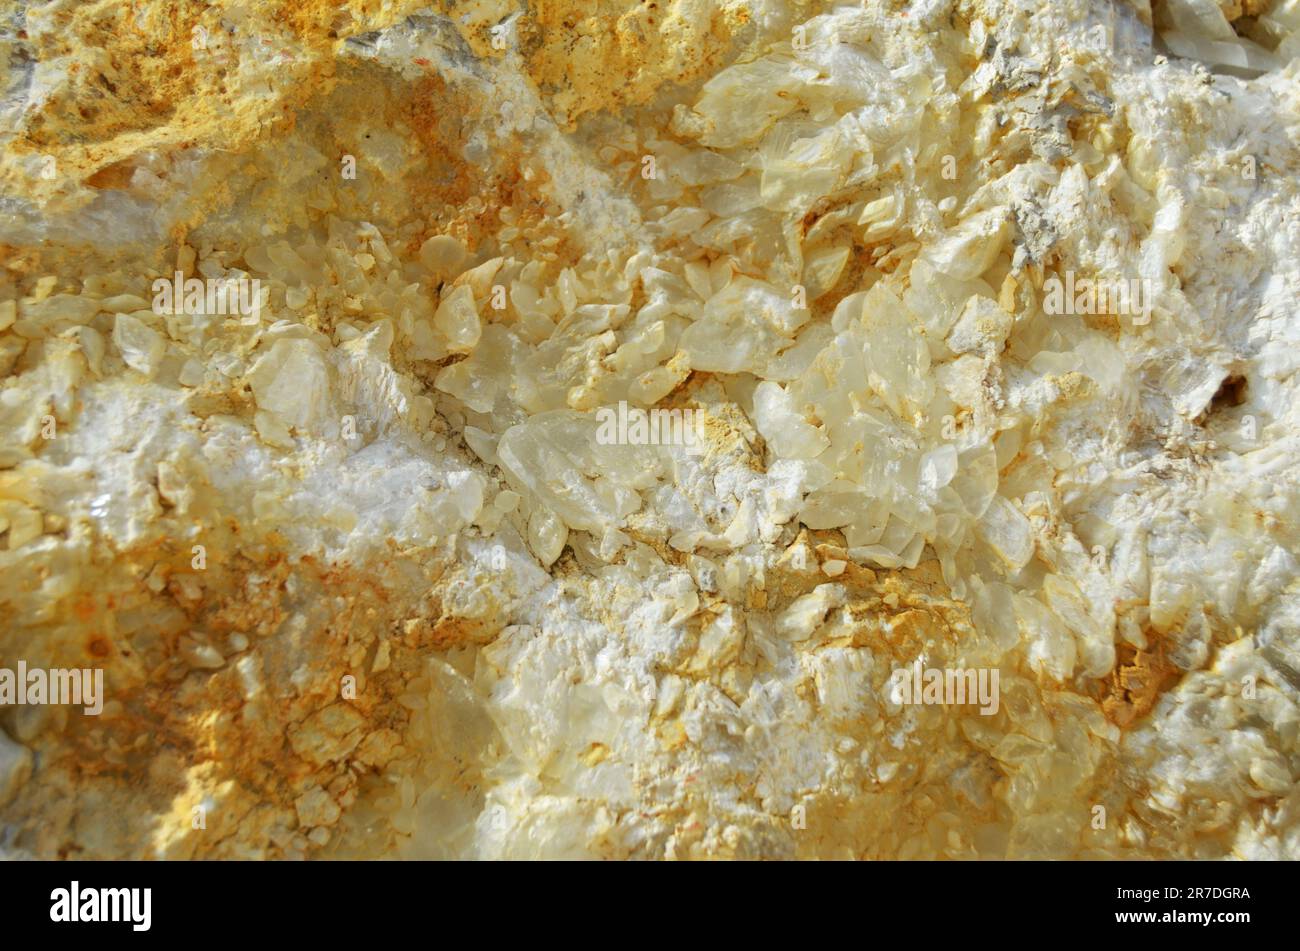 underground precious stones and minerals close-up Stock Photo